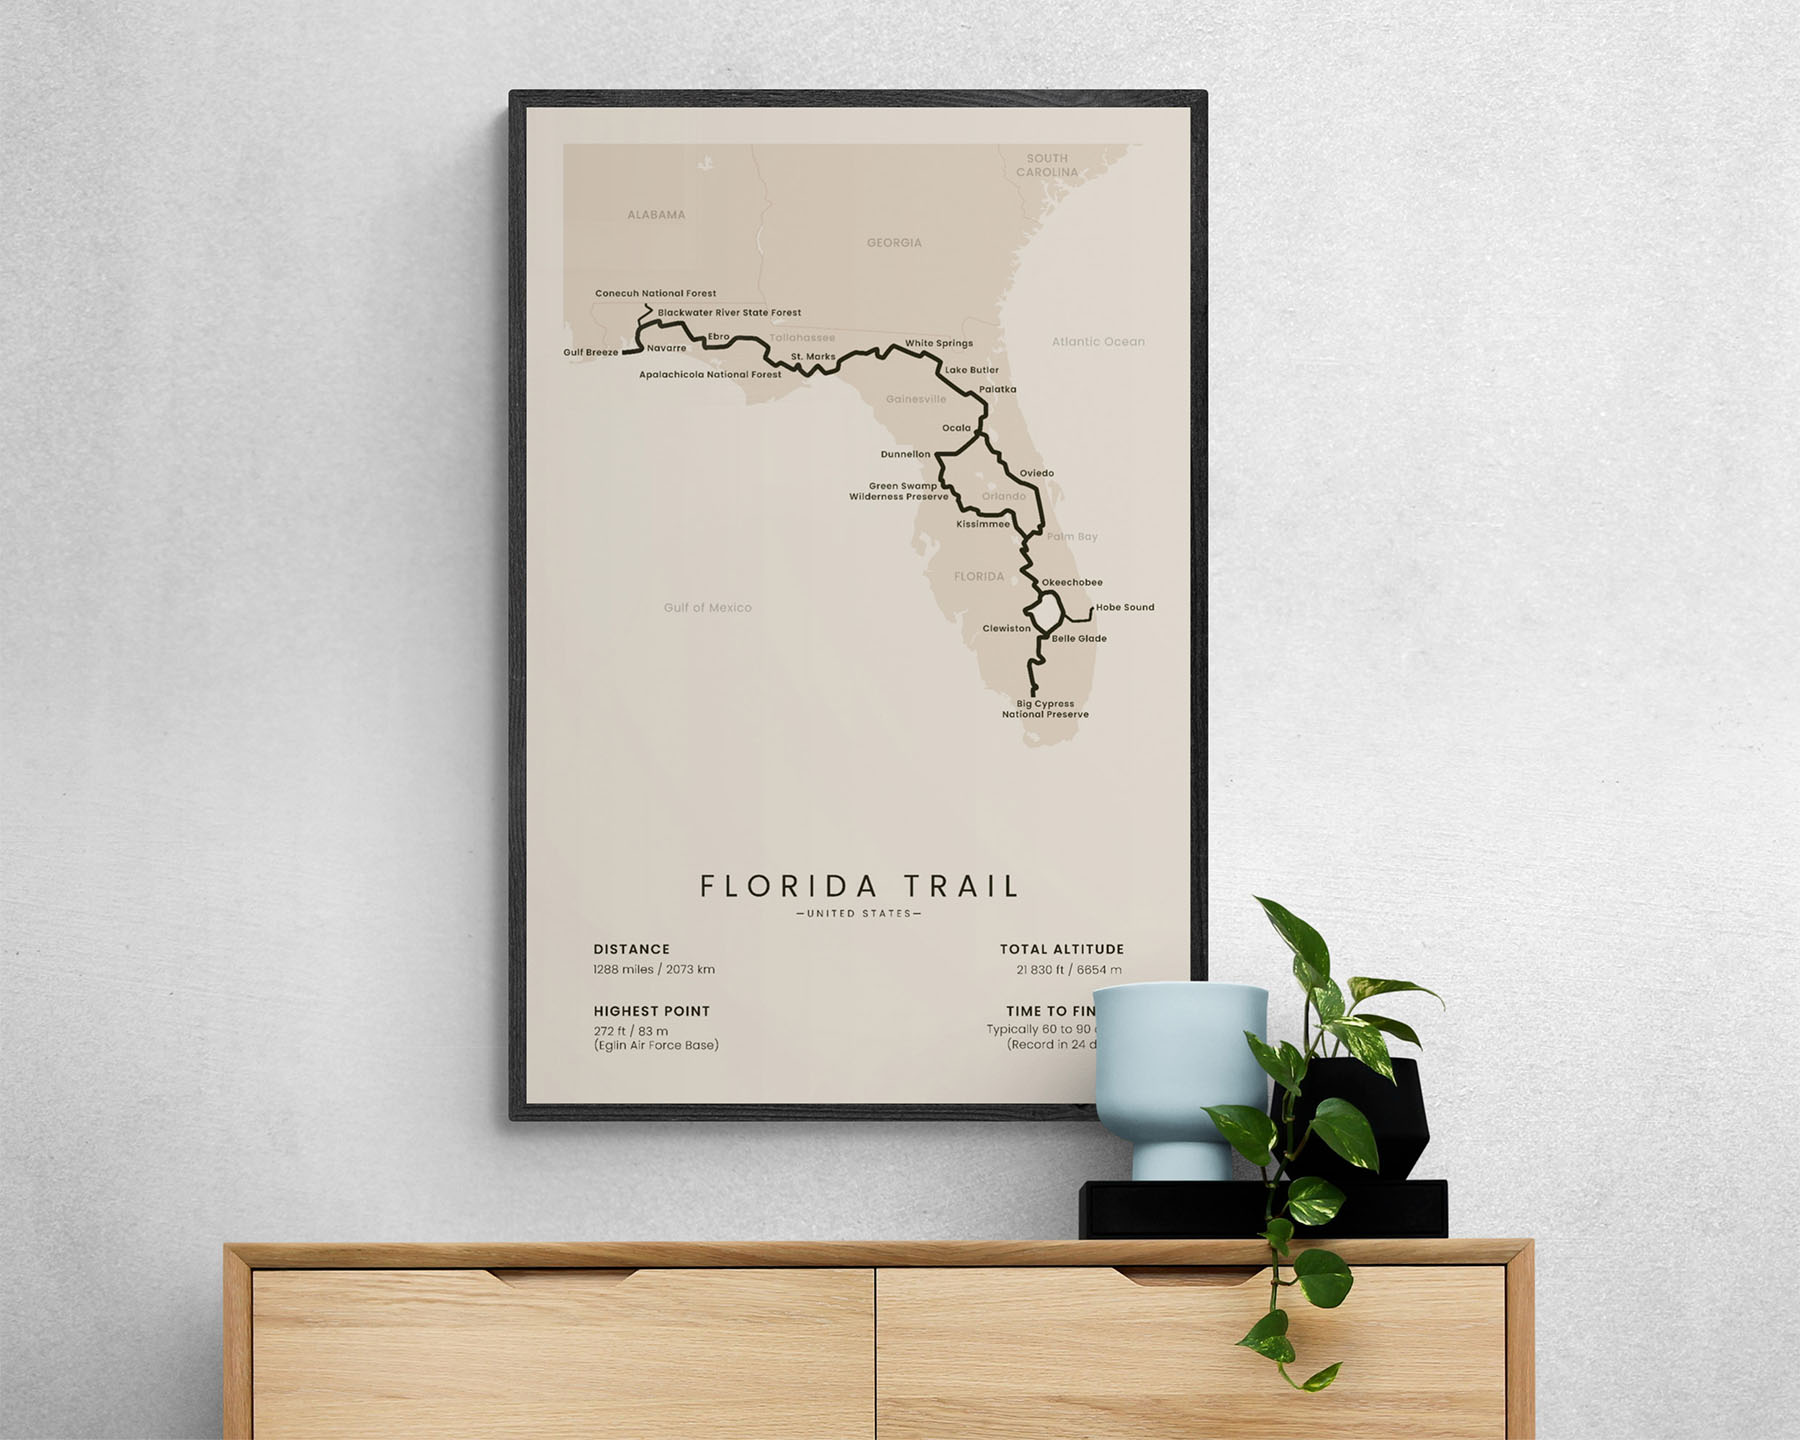 Florida Trail hike map art in minimal room decor